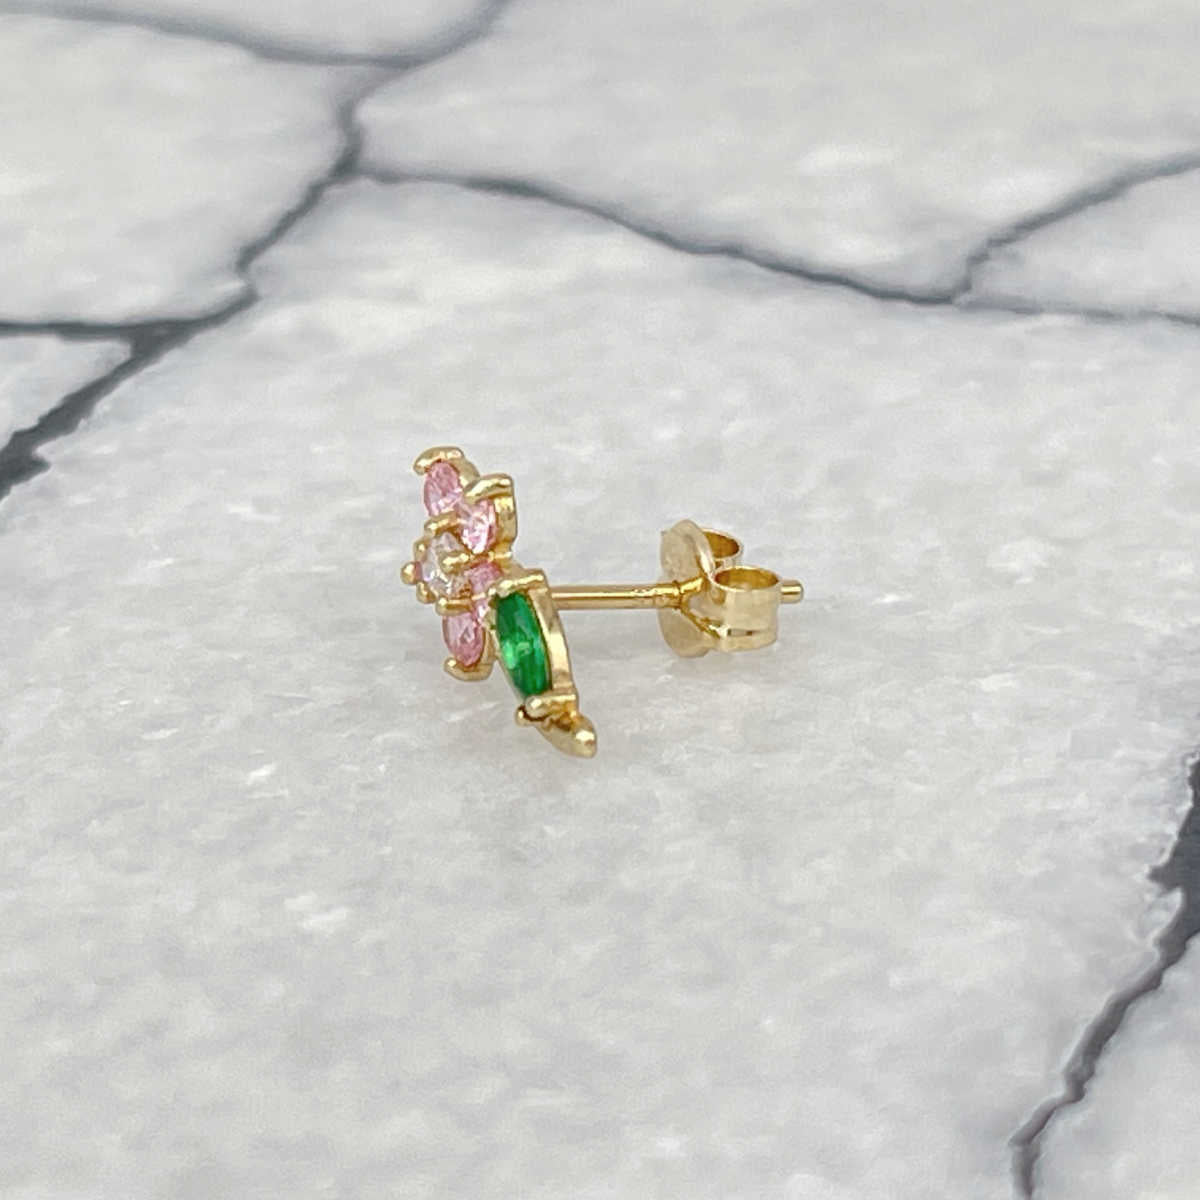 Pink Flower Earrings Side View, 14K Gold & Gemstone Studs, Two of Most Fine Jewelry